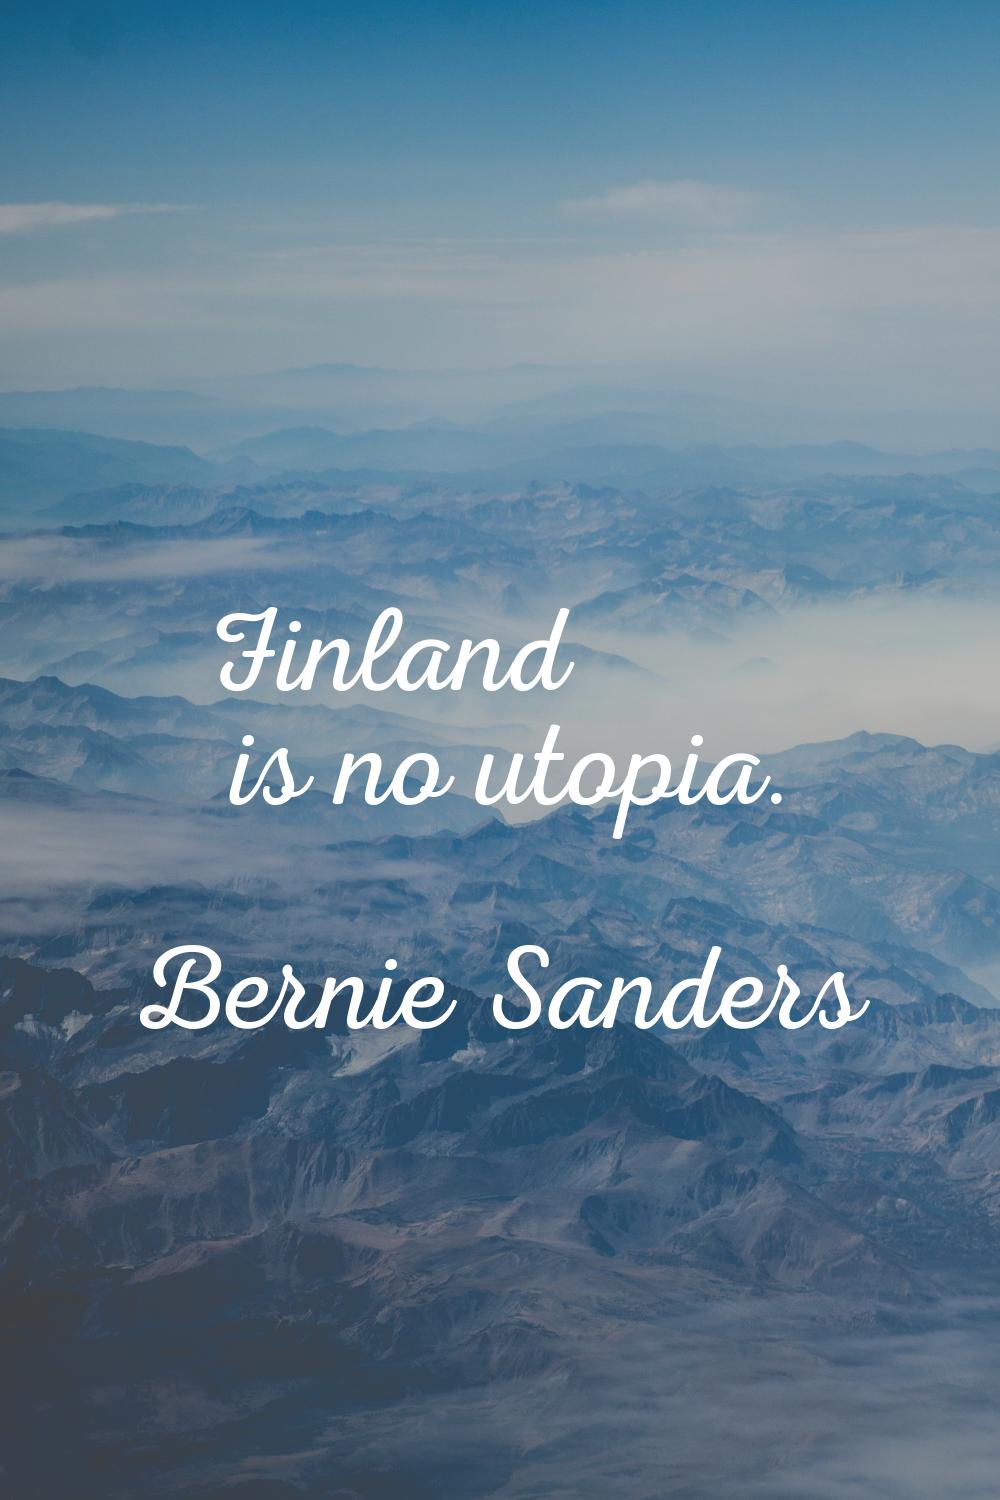 Finland is no utopia.